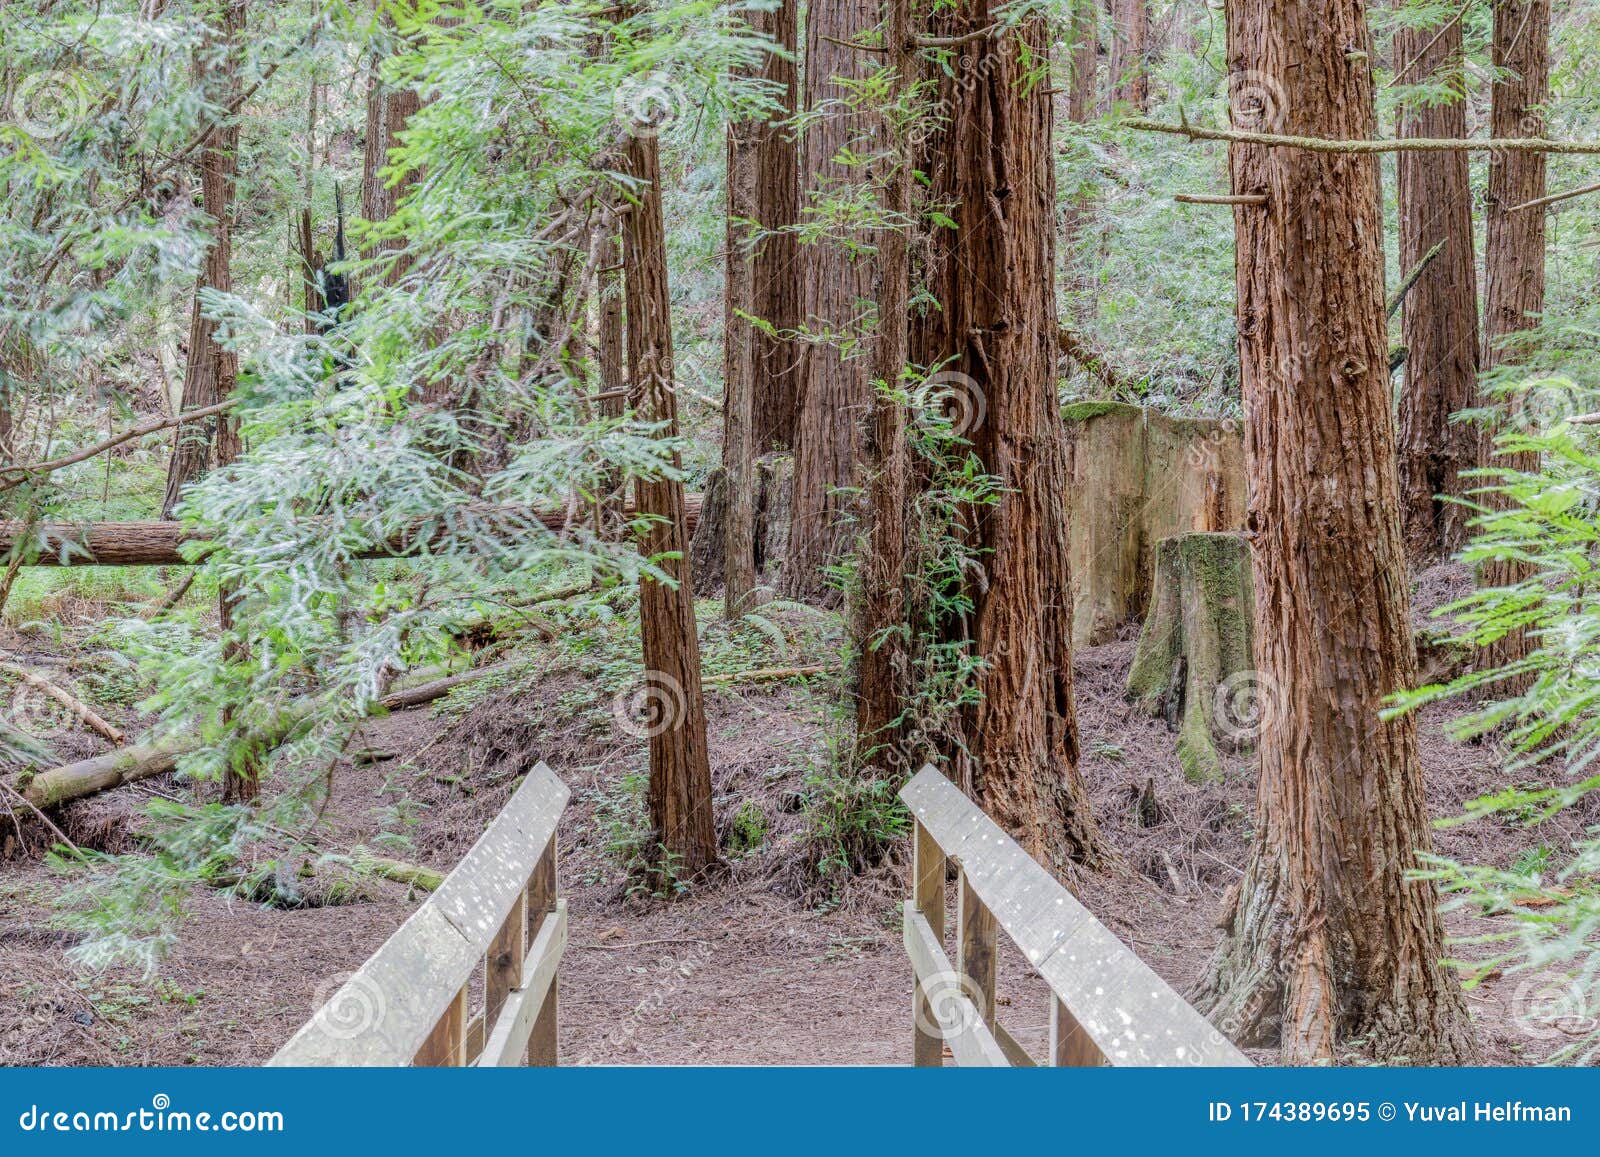 creek crossing footbridge with coast redwoods